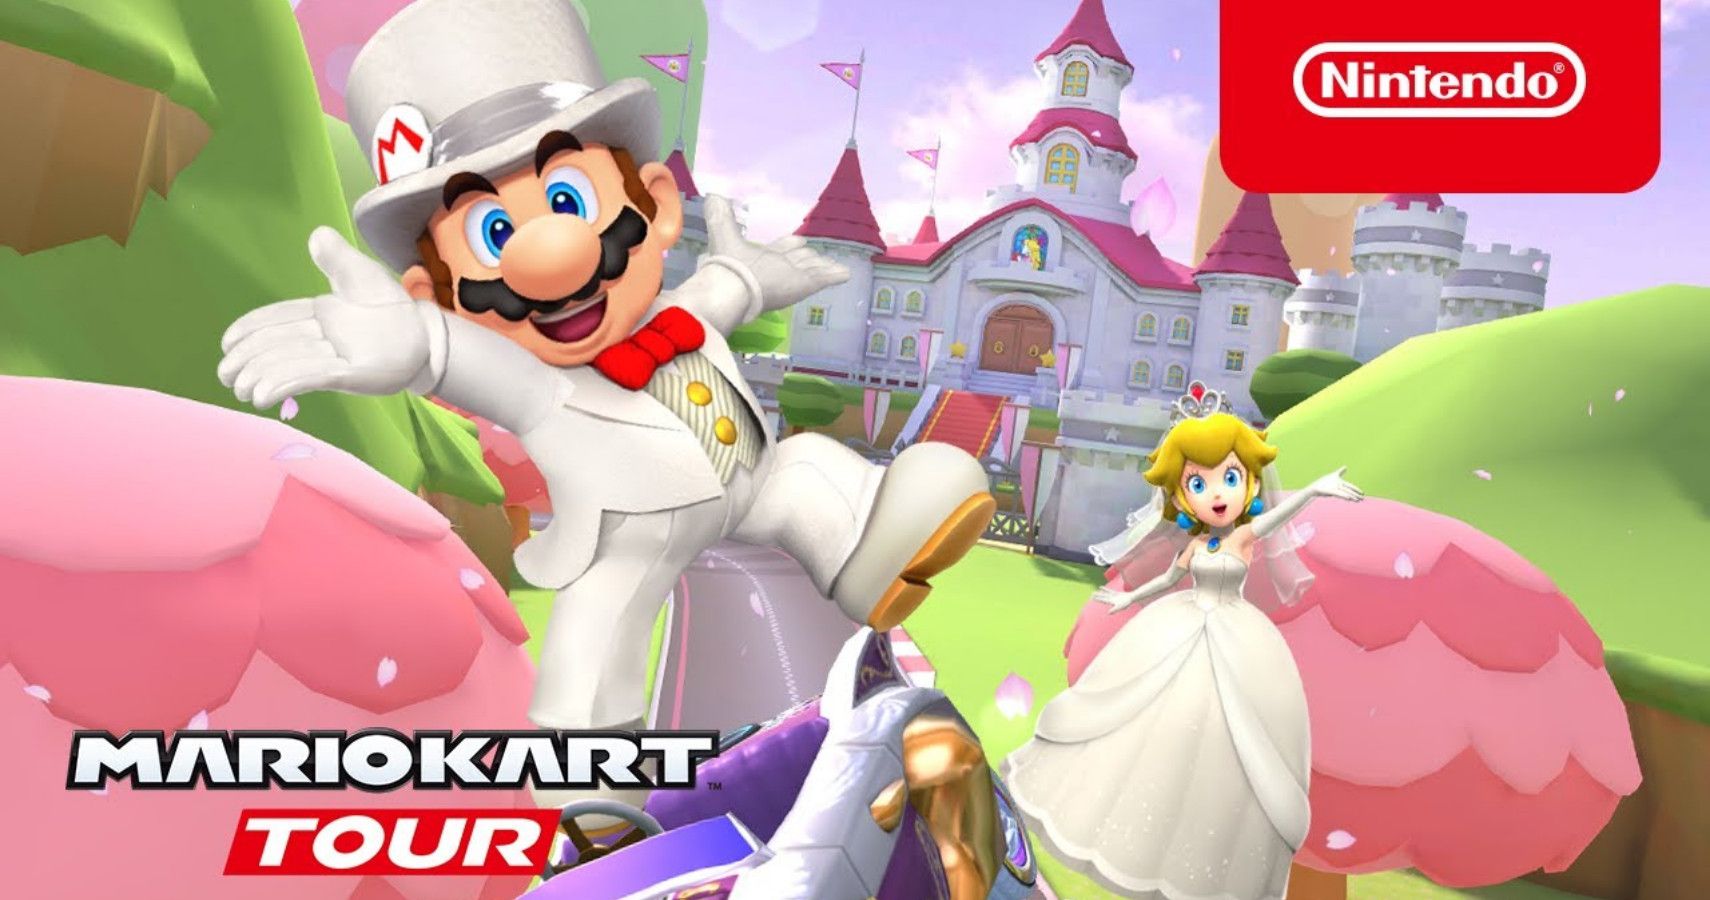 Mario and Peach In Mario Kart Wedding Tour